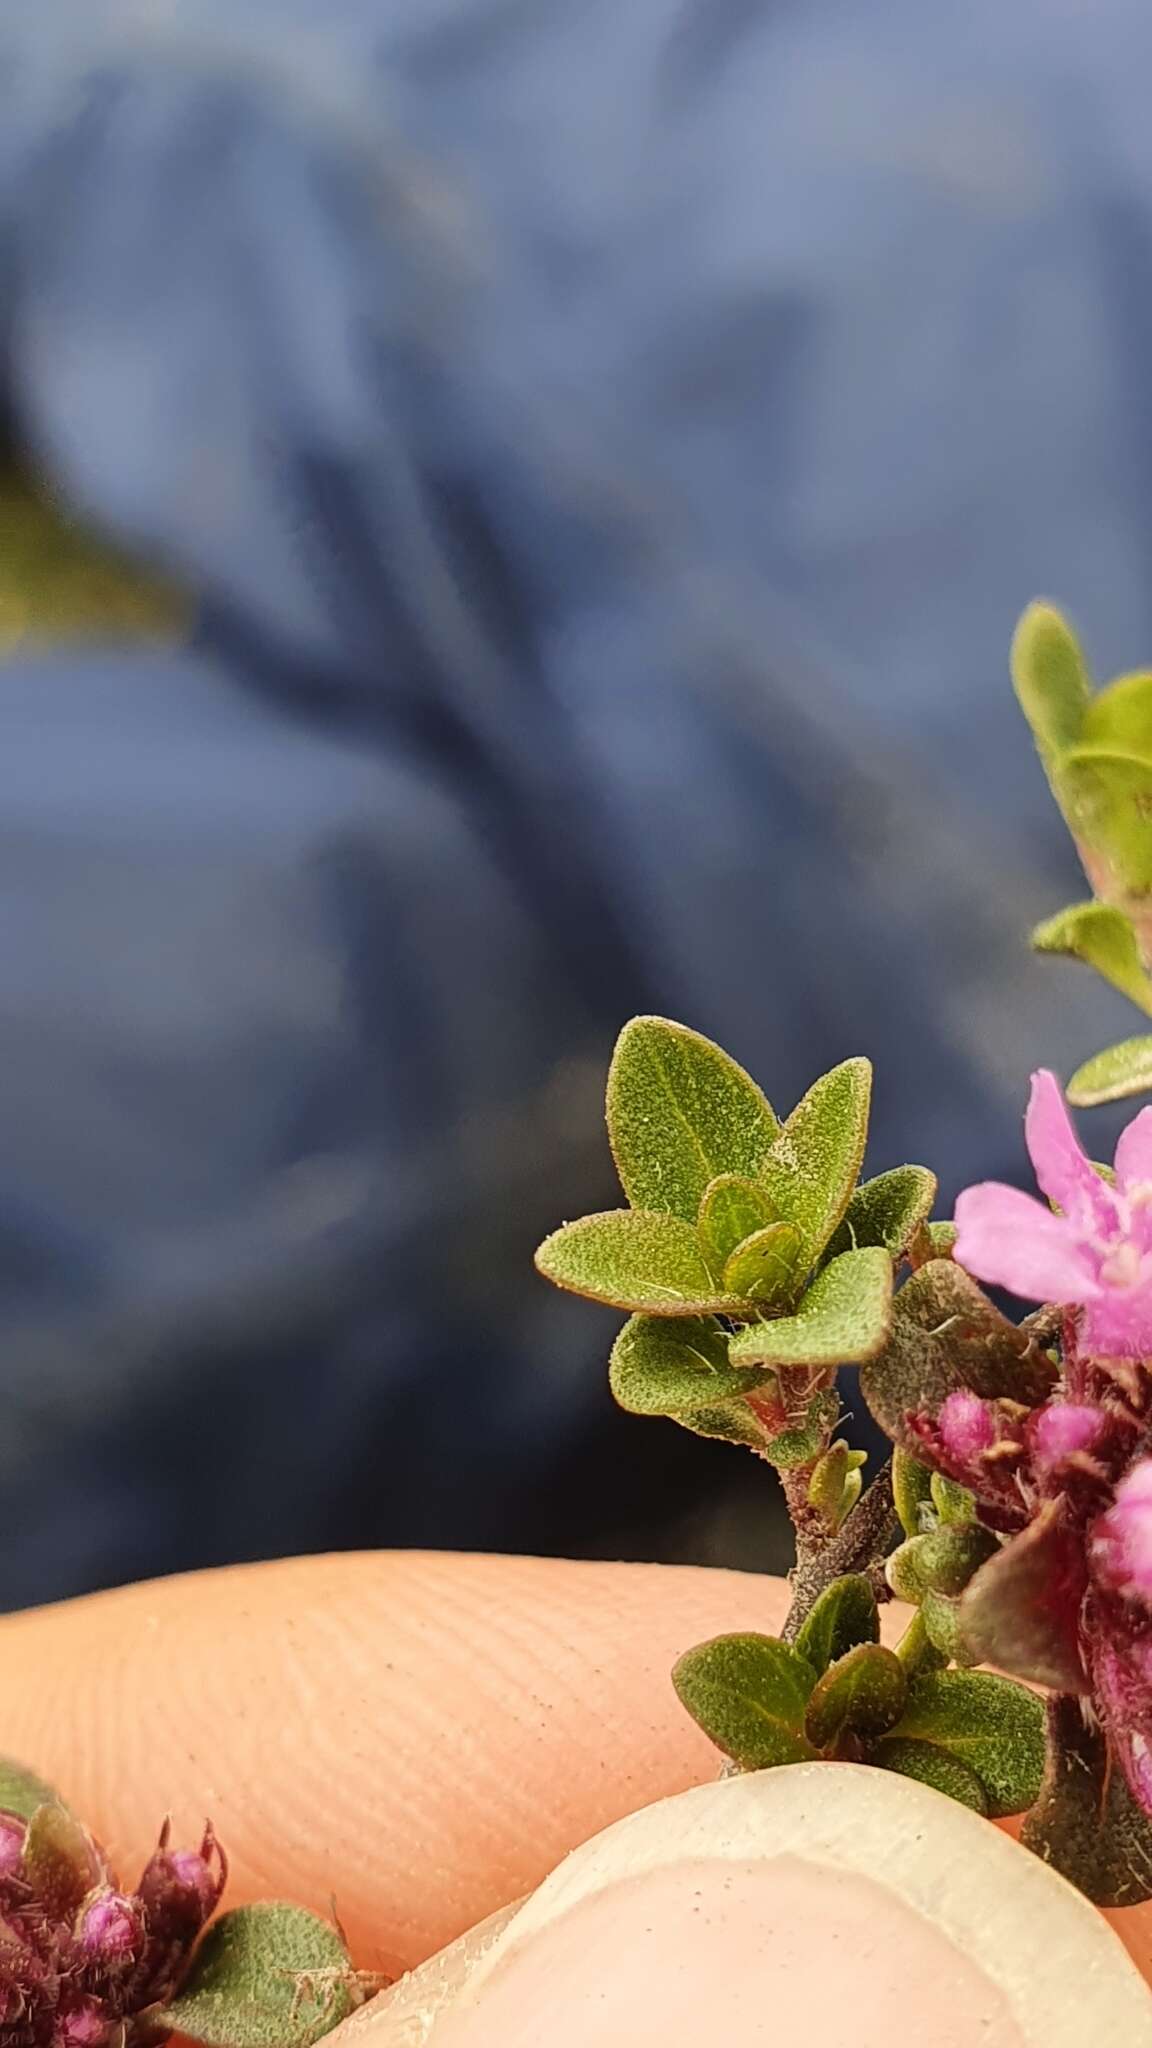 Image of Thymus praecox subsp. praecox